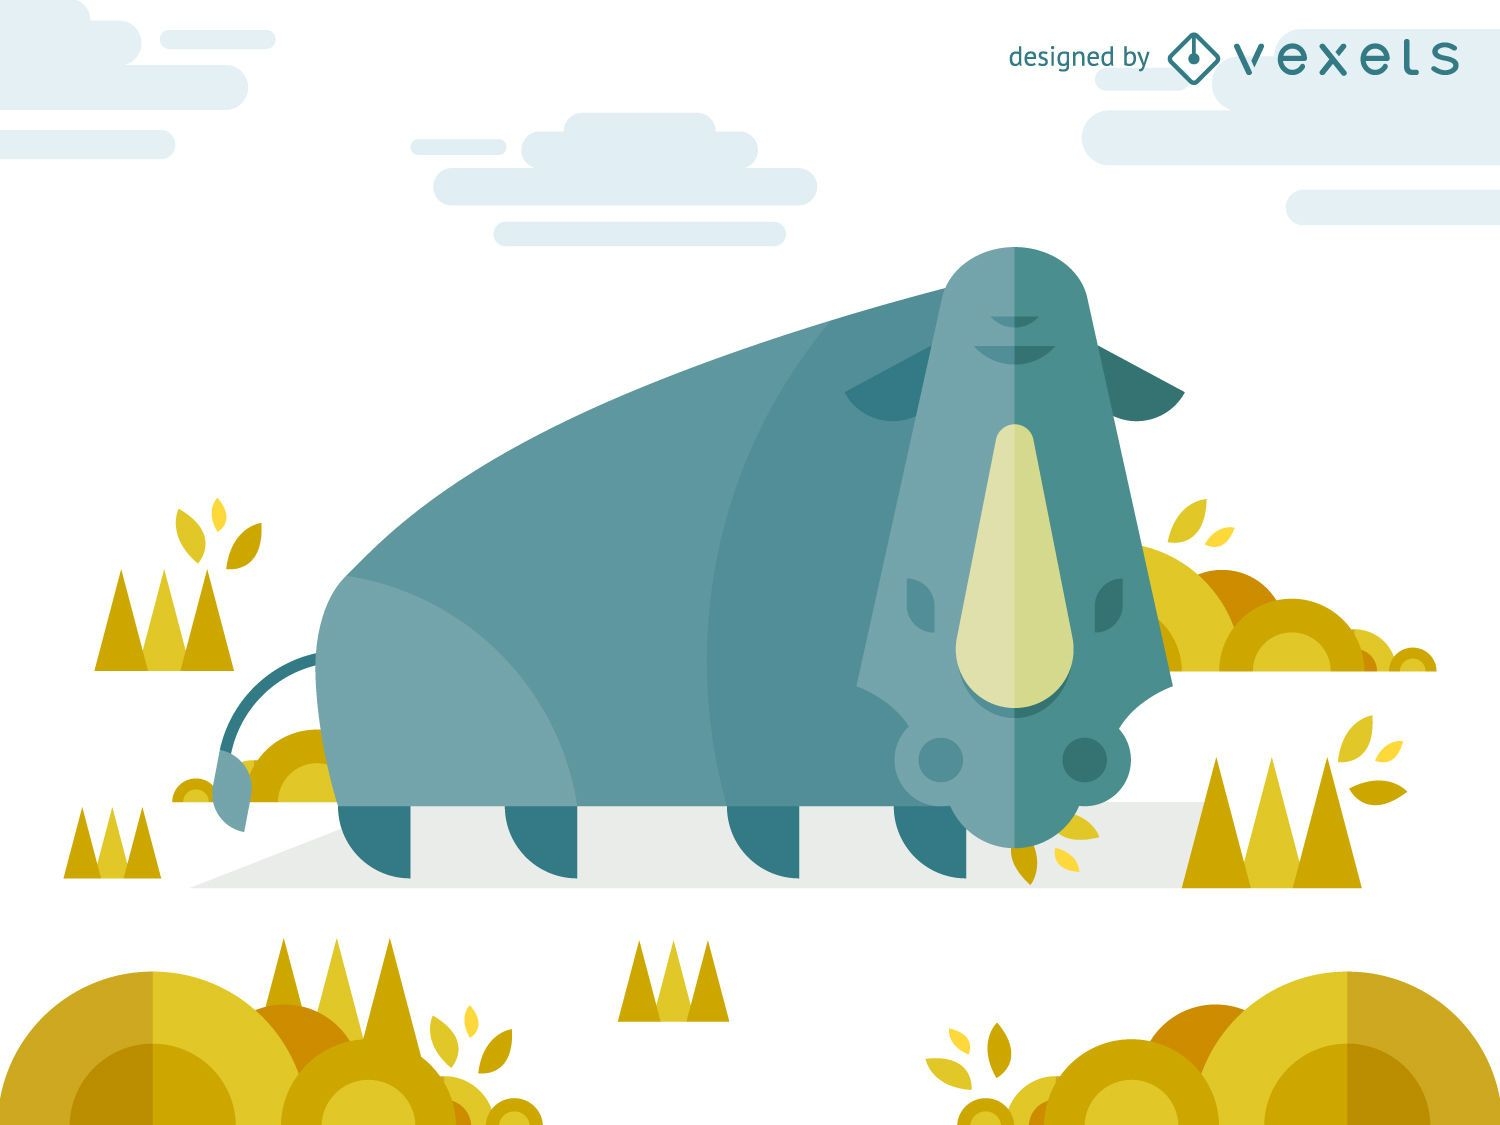 Geometric rhino illustration